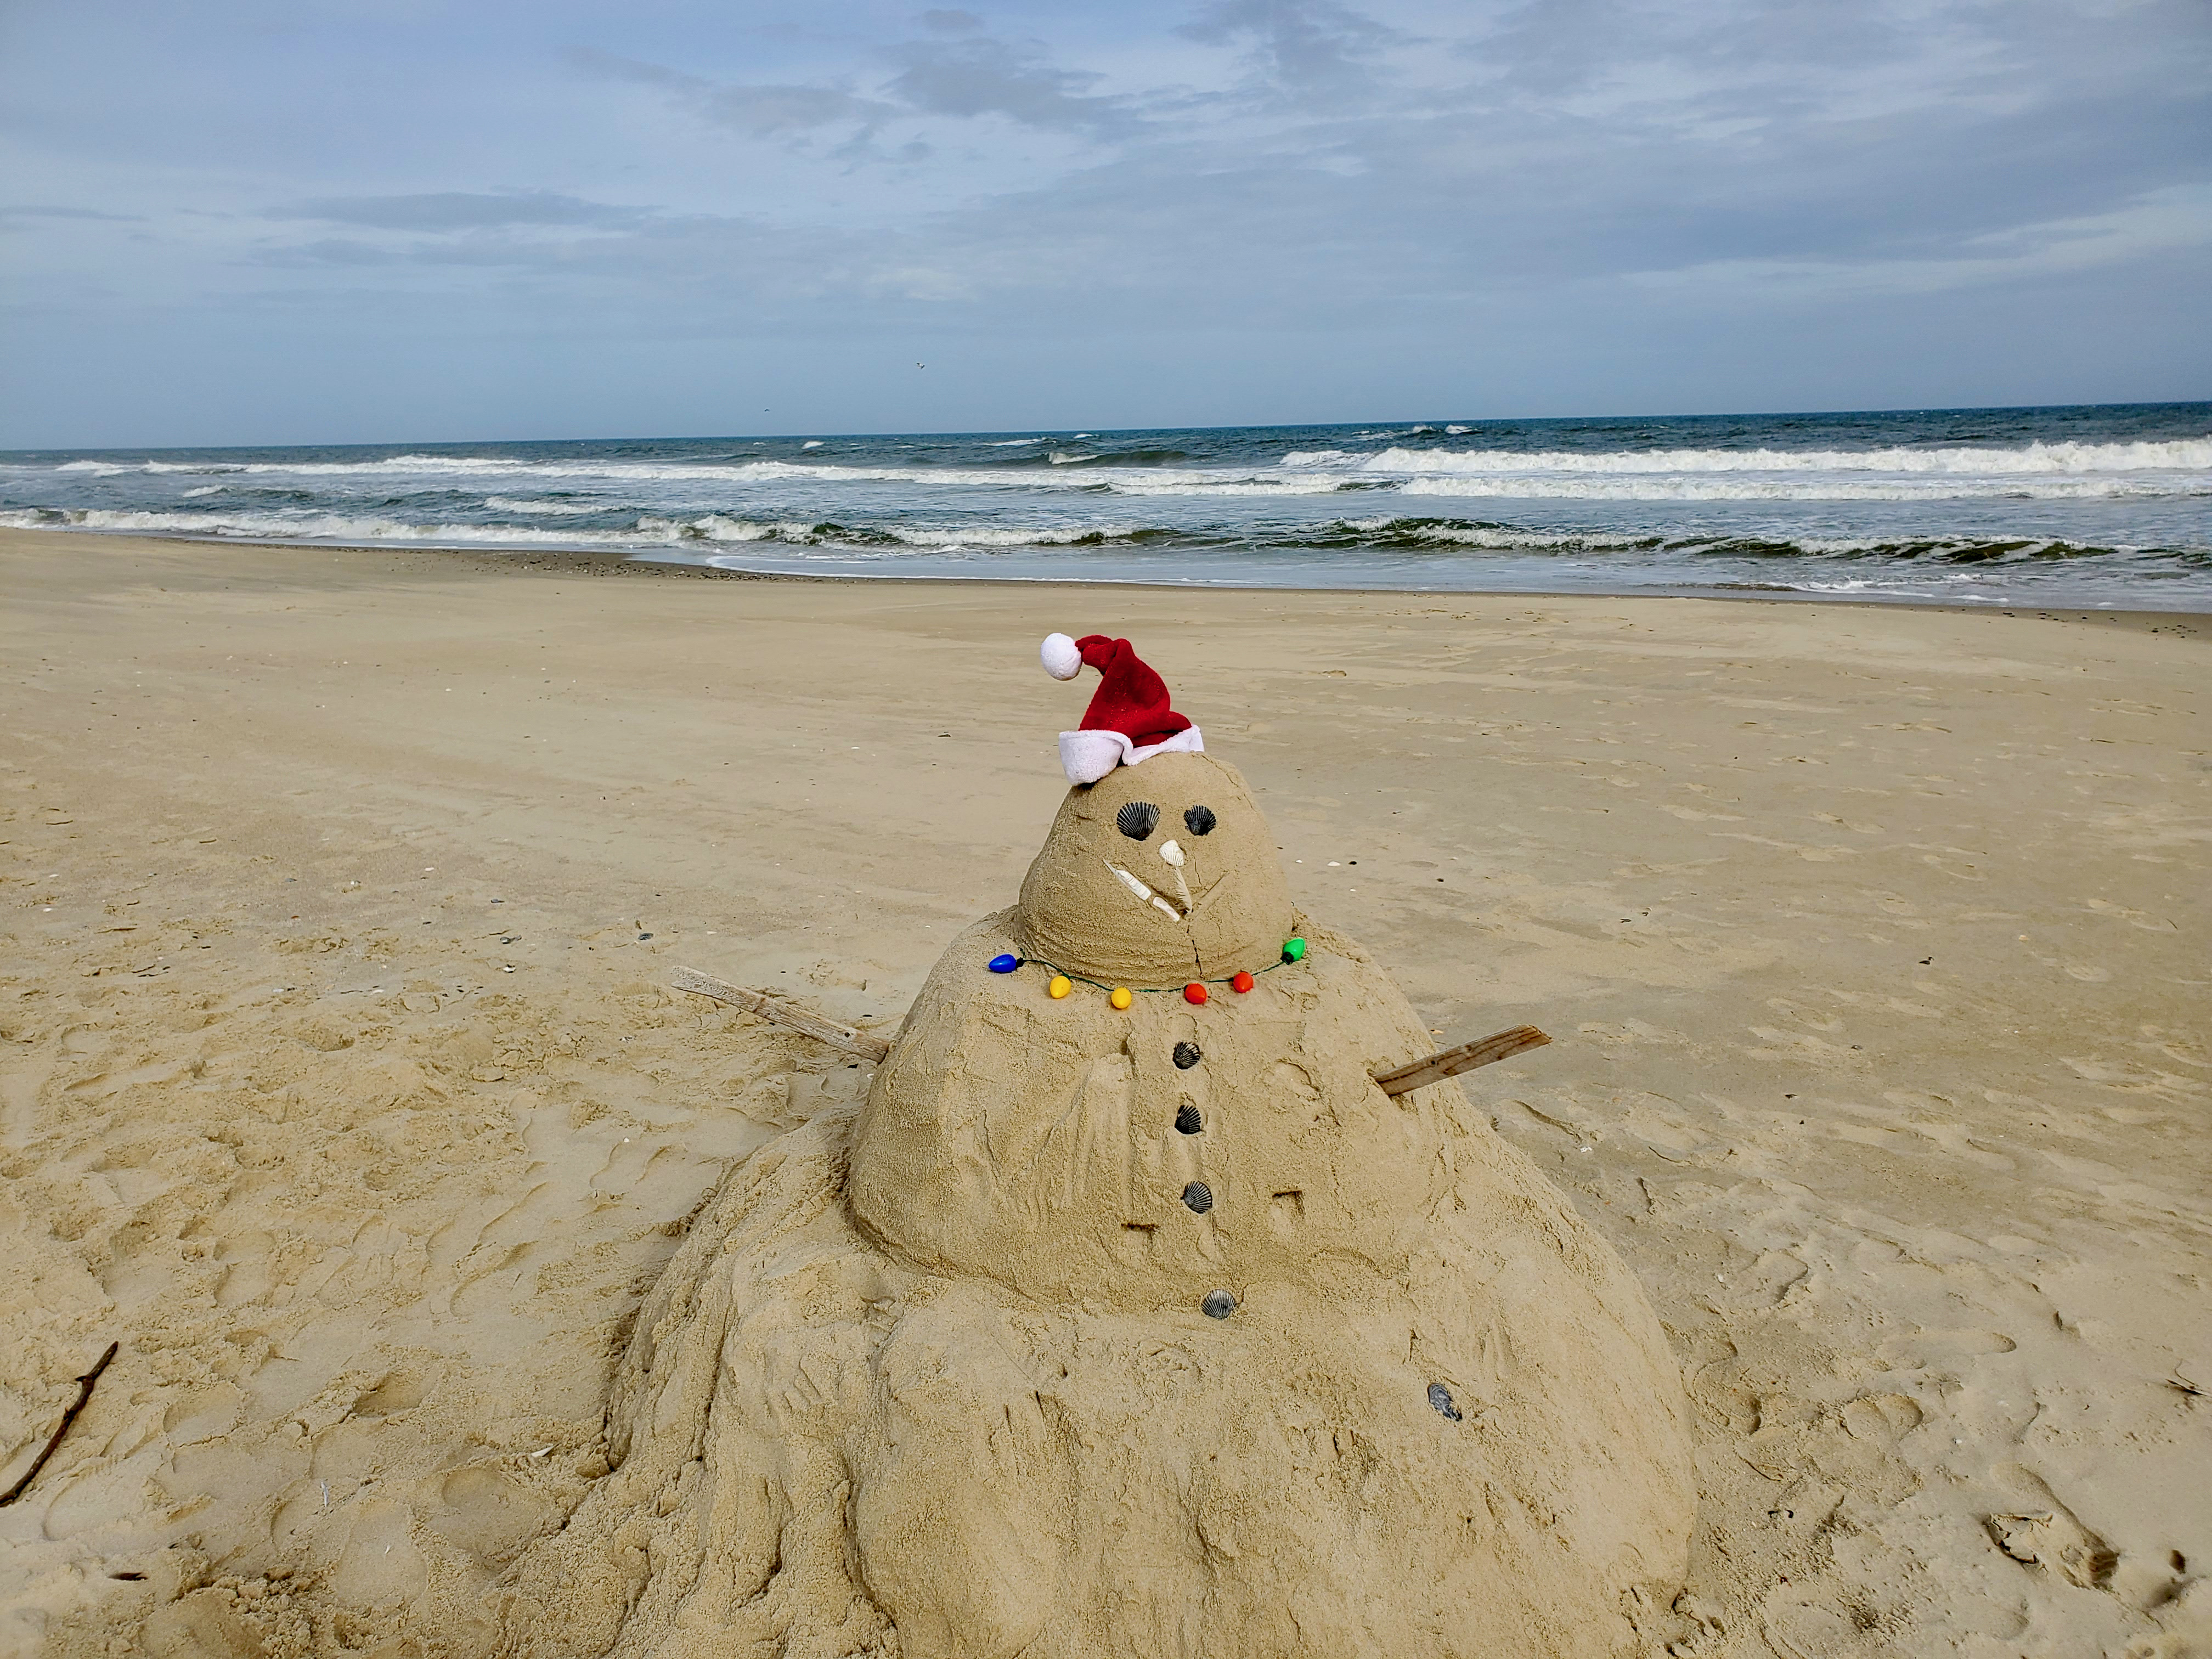 A sandman, not a snowman on Corolla Beach. My own photo.